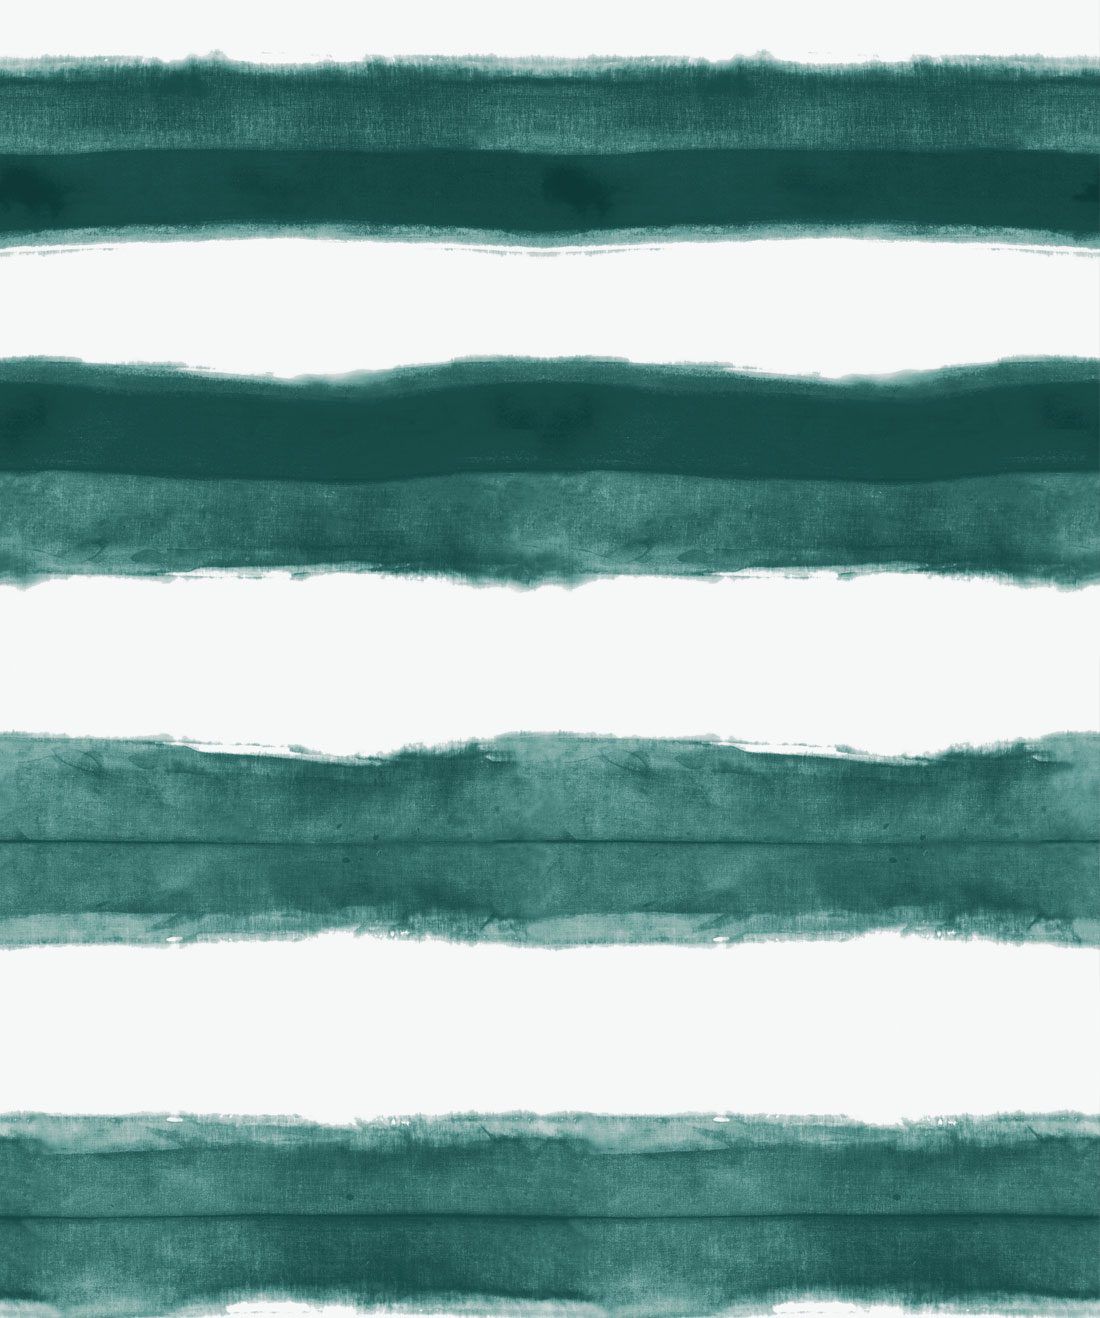 Shibori Stripe Ocean Wallpaper